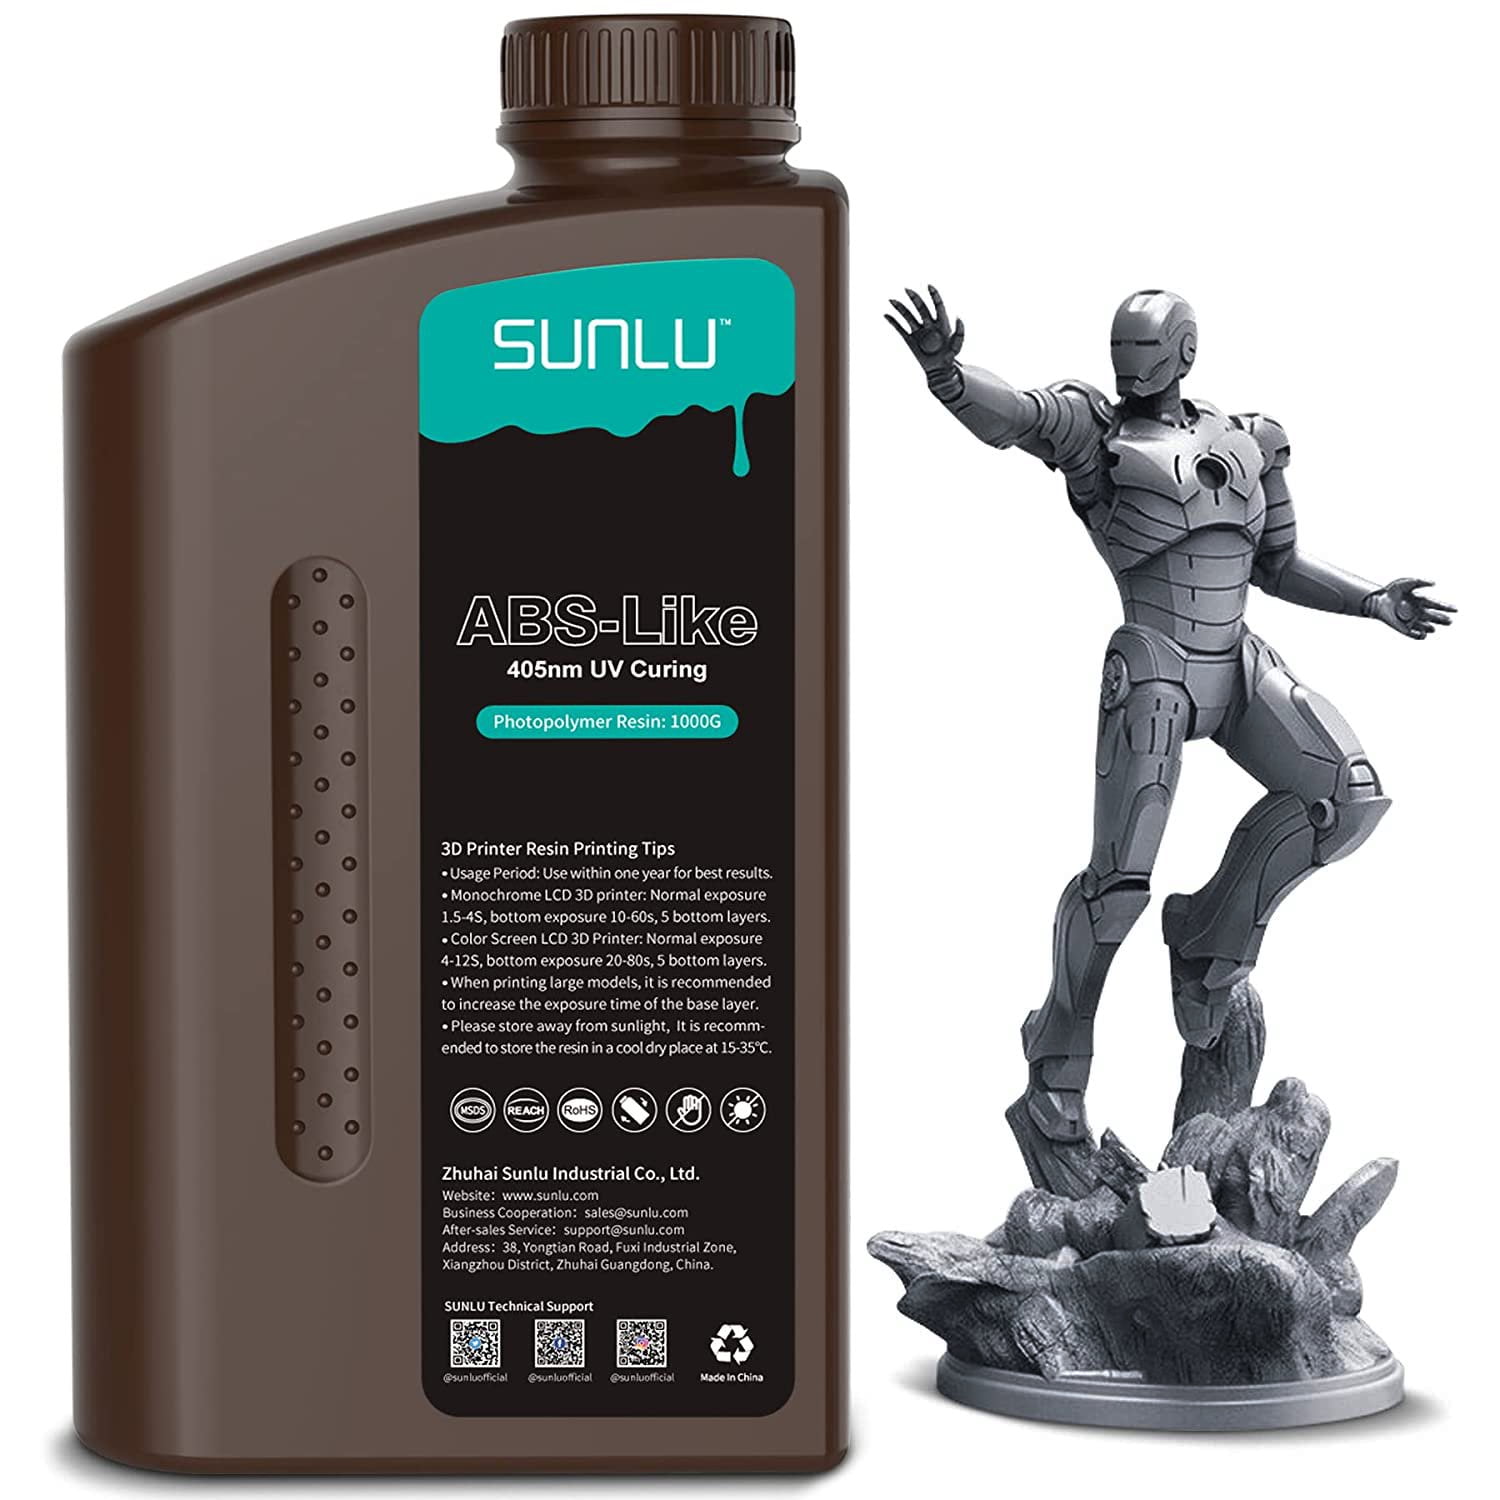 SUNLU ABS-Like Resin 405nm LCD UV-Curing Resin